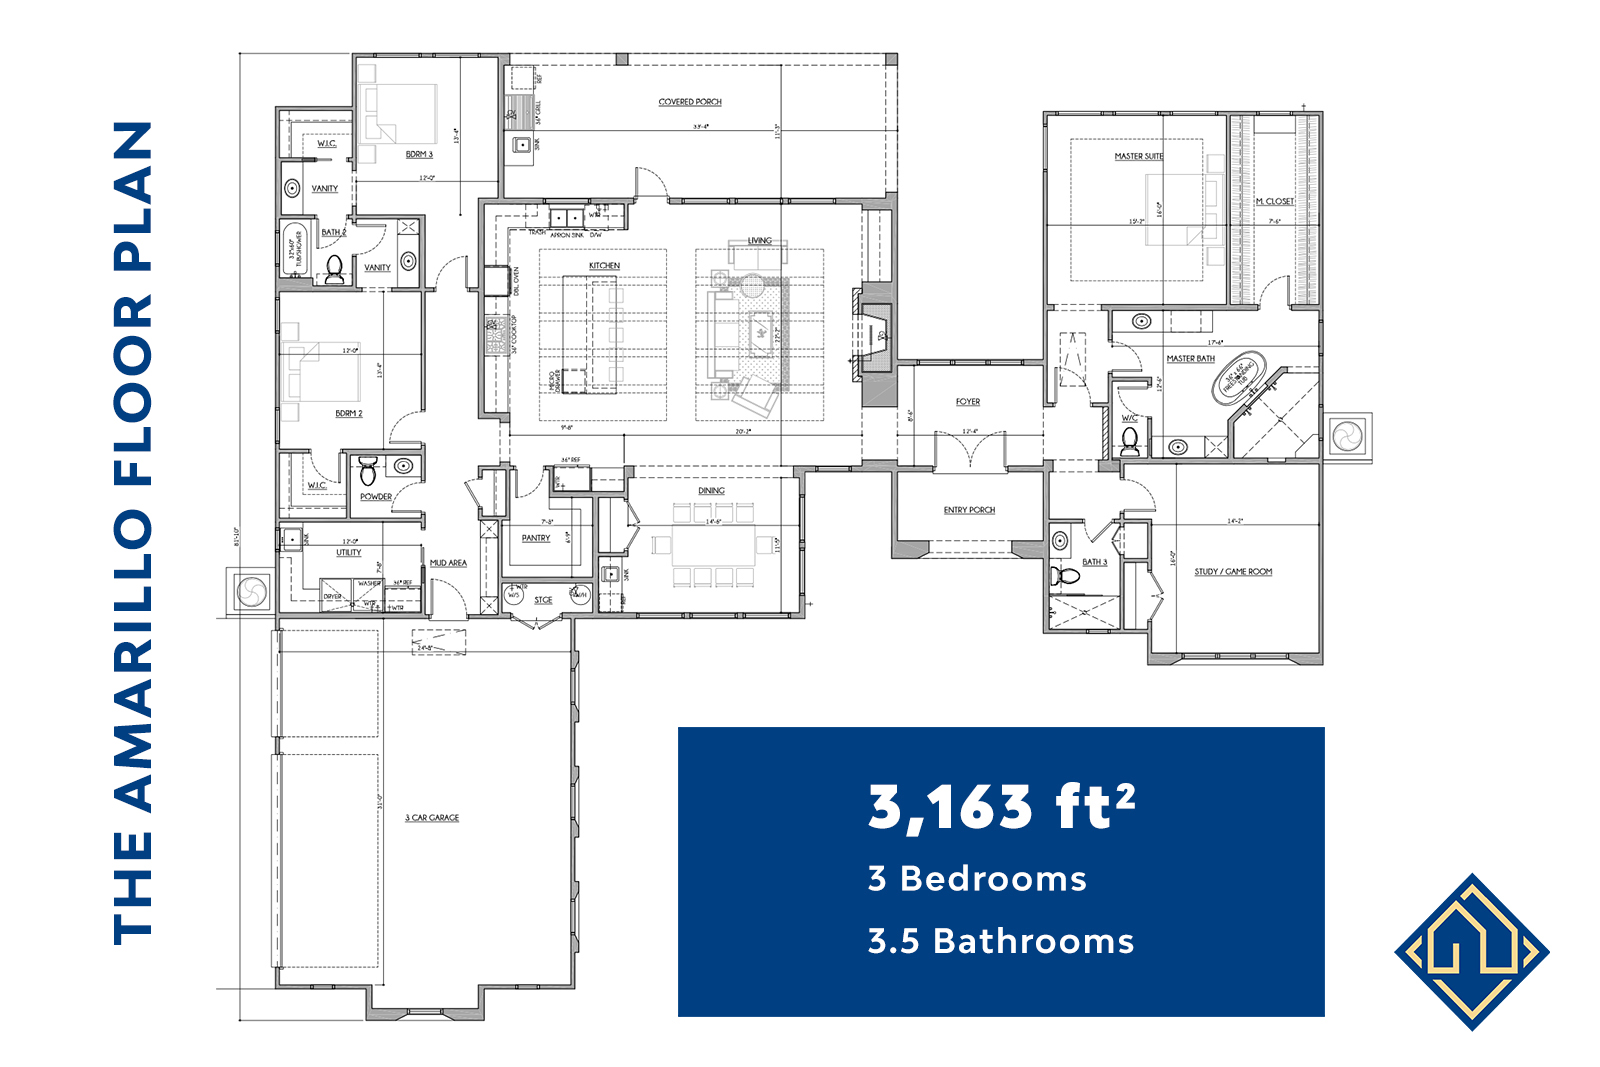 3 Bedroom 3.5 Bathroom Floor Plan with dimensions